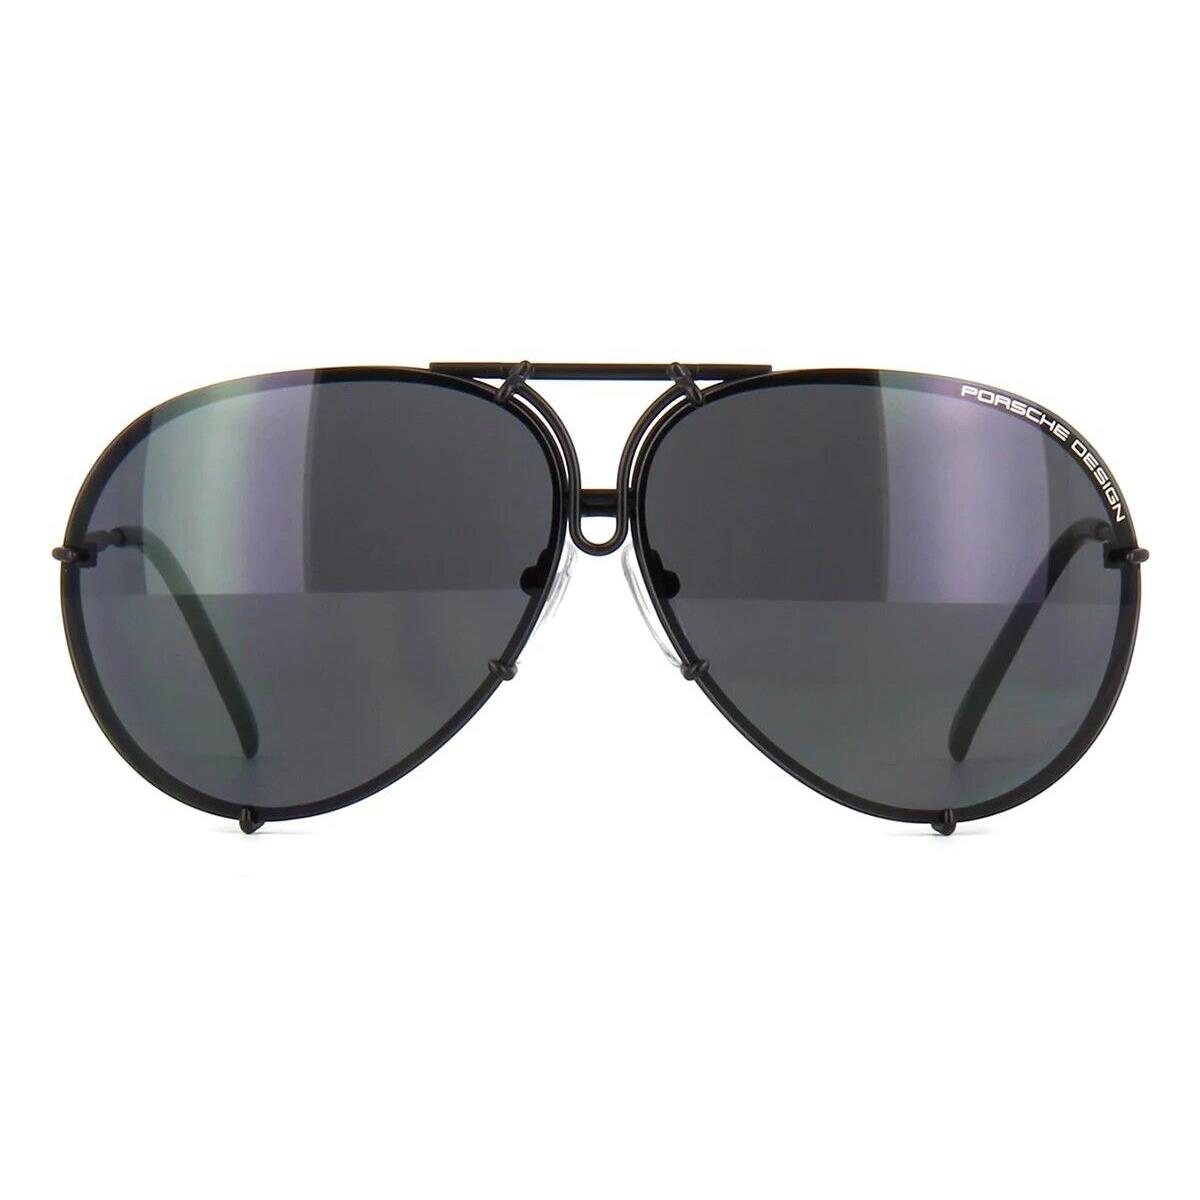 Porsche Design 8478D Sunglasses Black Frame with Interchangeable Lens 69mm